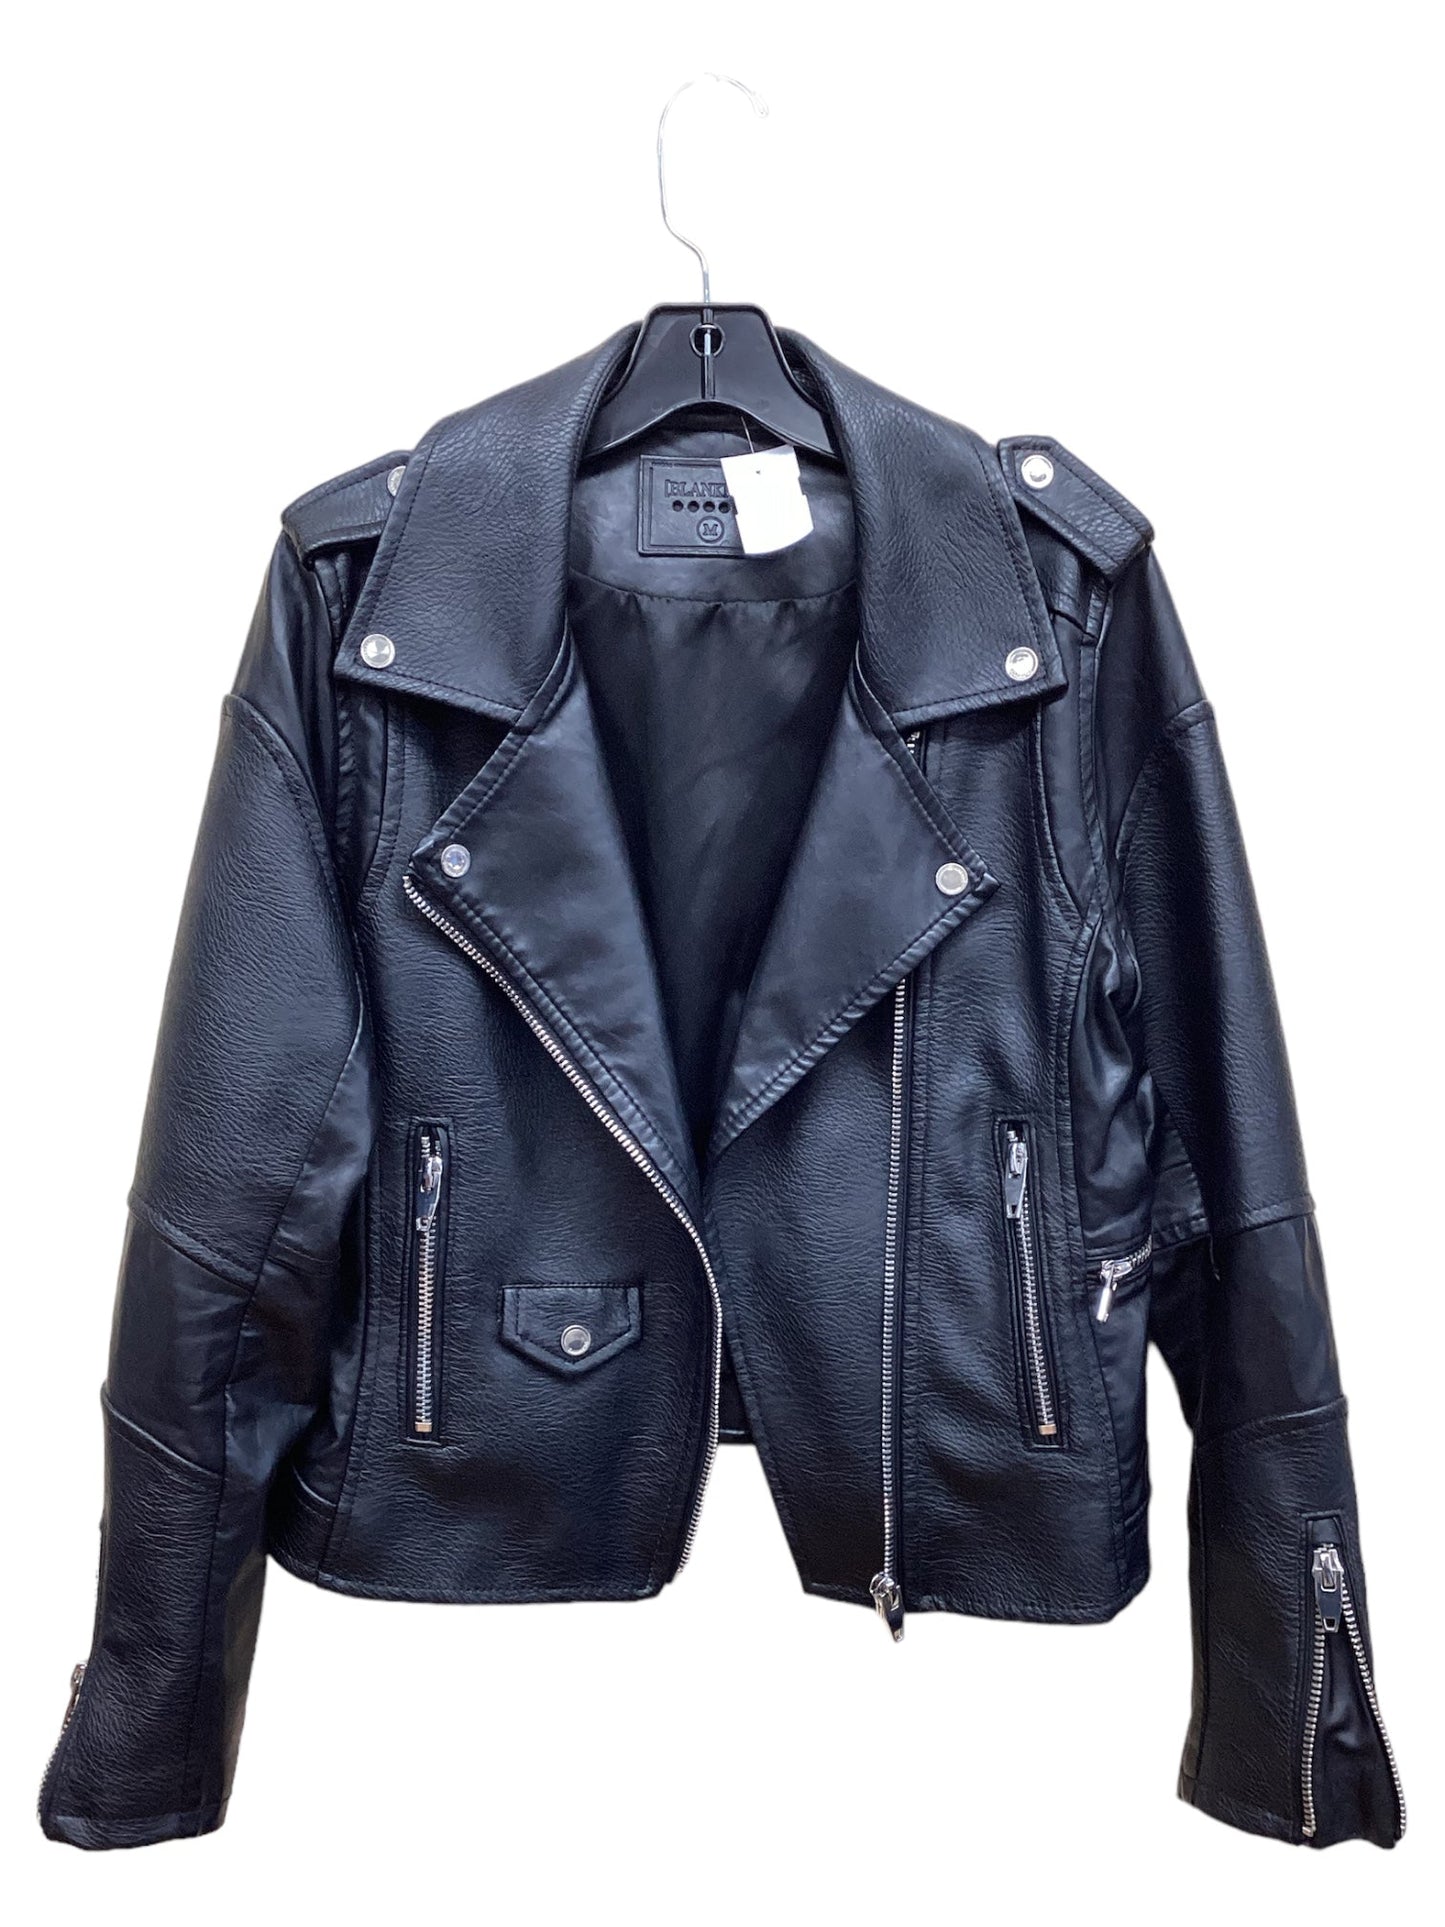 Jacket Moto Leather By Blanknyc  Size: M